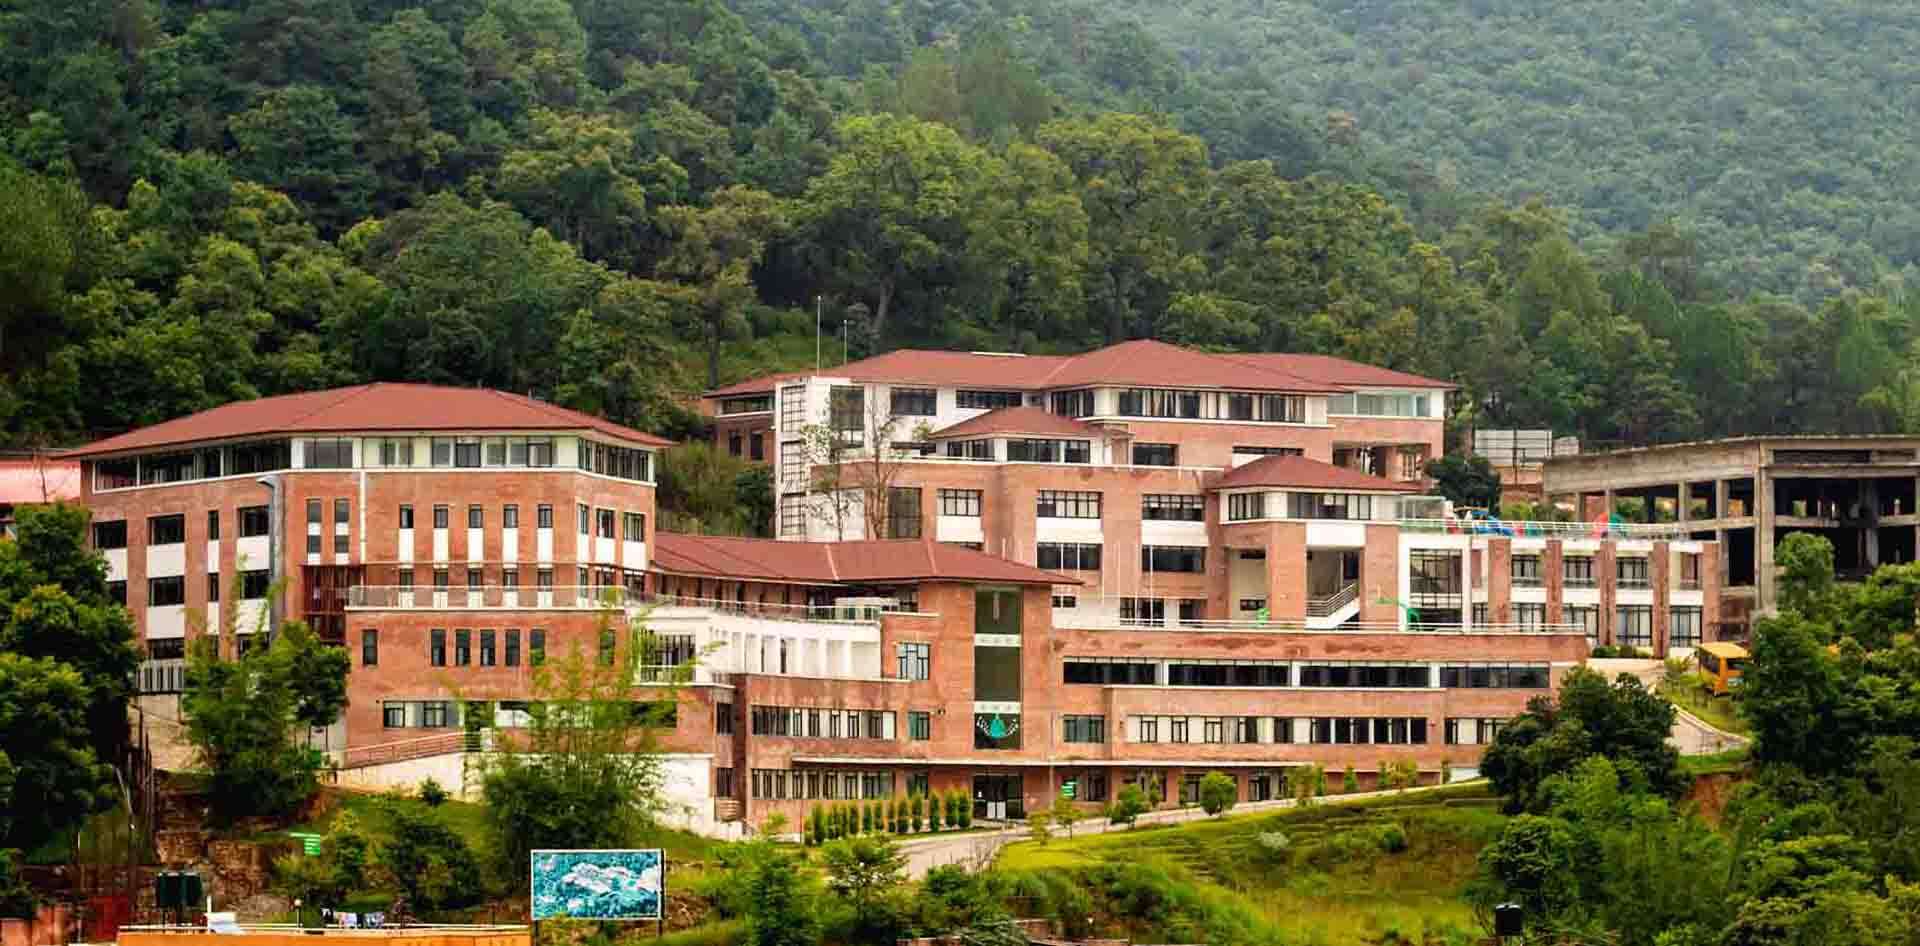 Kathmandu World School